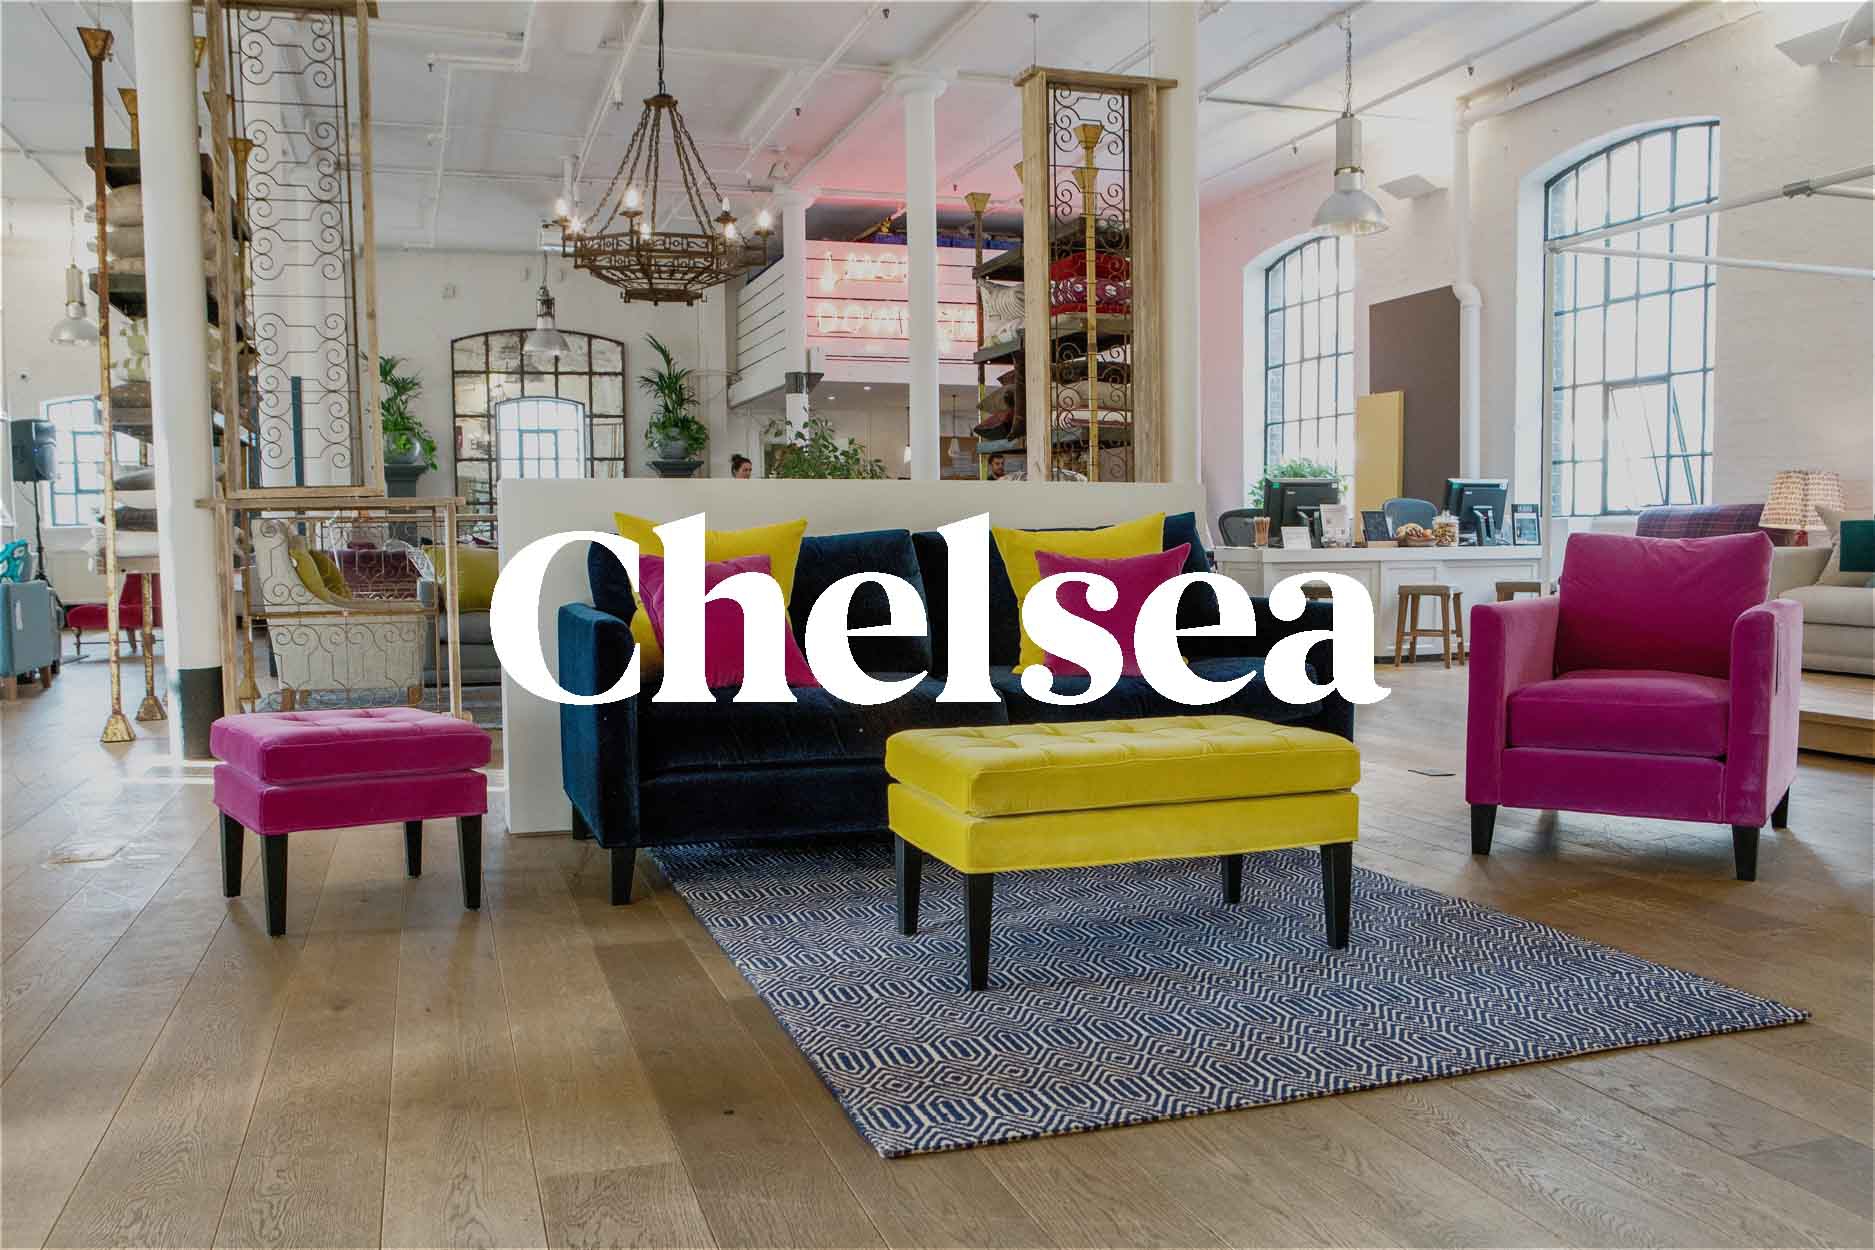 Chelsea Sofa Store